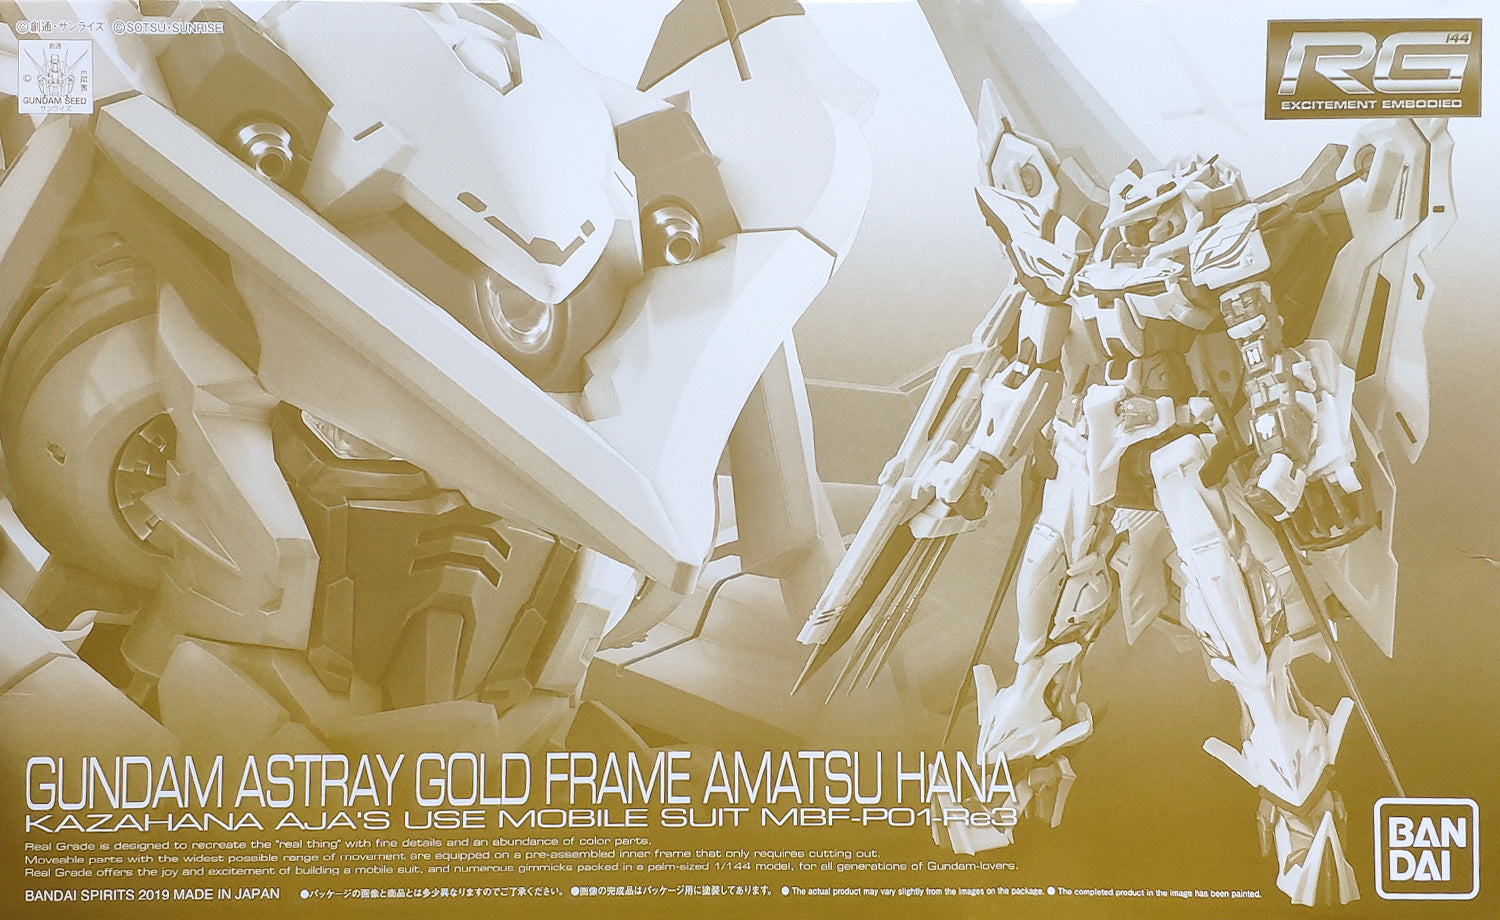 RG Gundam Astray Gold Frame Amatsu Hana - P-Bandai 1/144